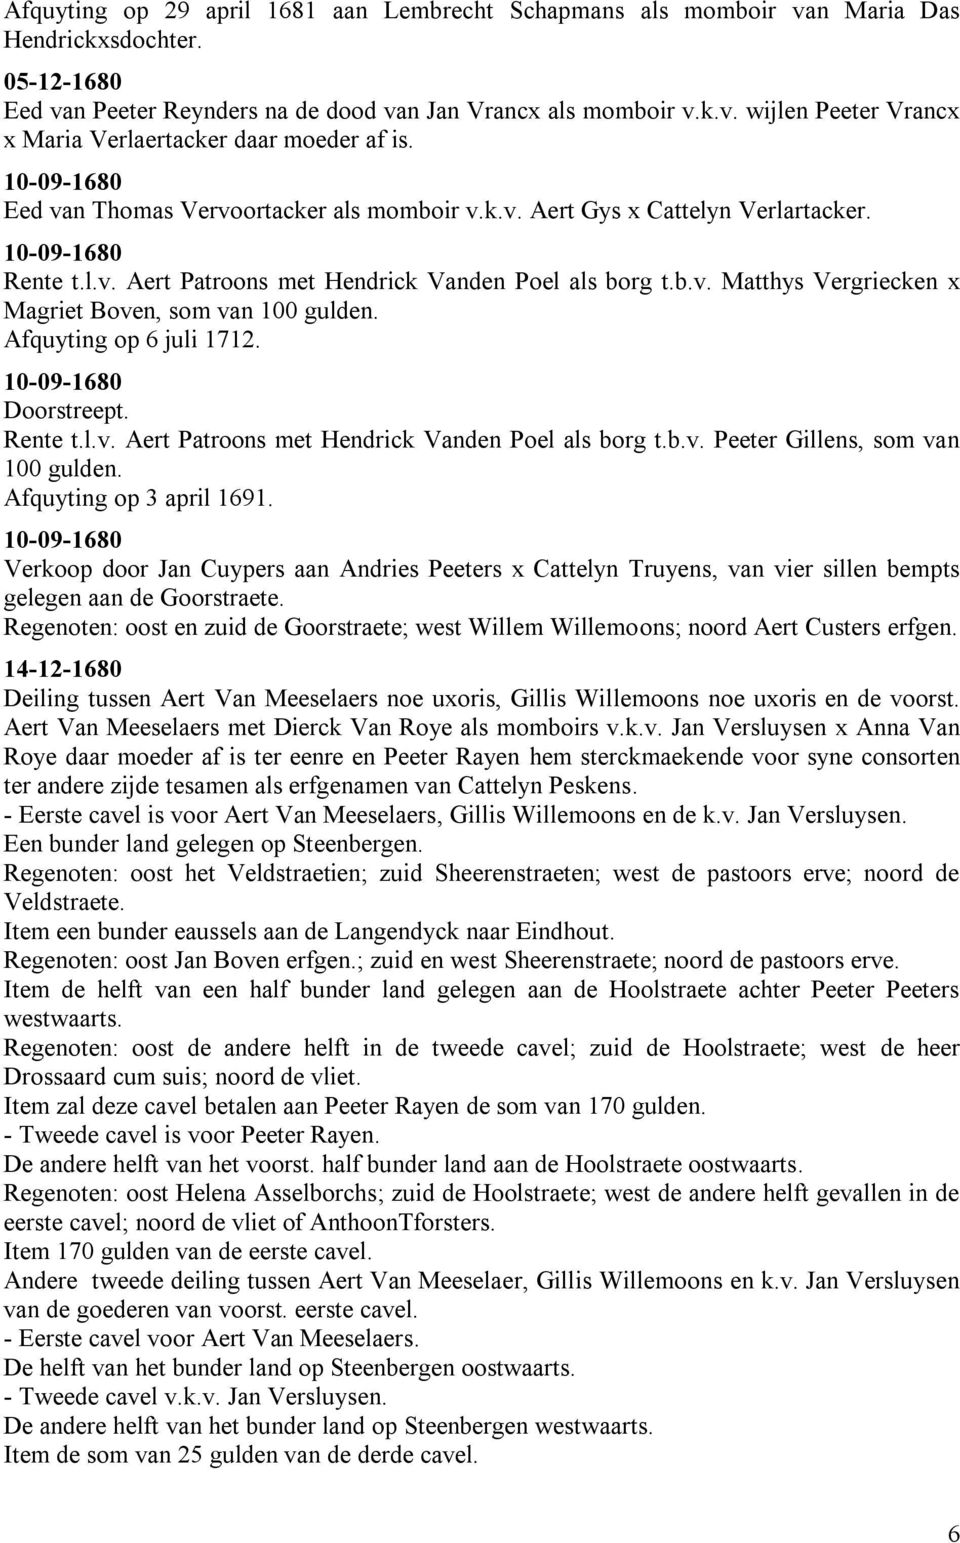 Afquyting op 6 juli 1712. 10-09-1680 Rente t.l.v. Aert Patroons met Hendrick Vanden Poel als borg t.b.v. Peeter Gillens, som van 100 gulden. Afquyting op 3 april 1691.